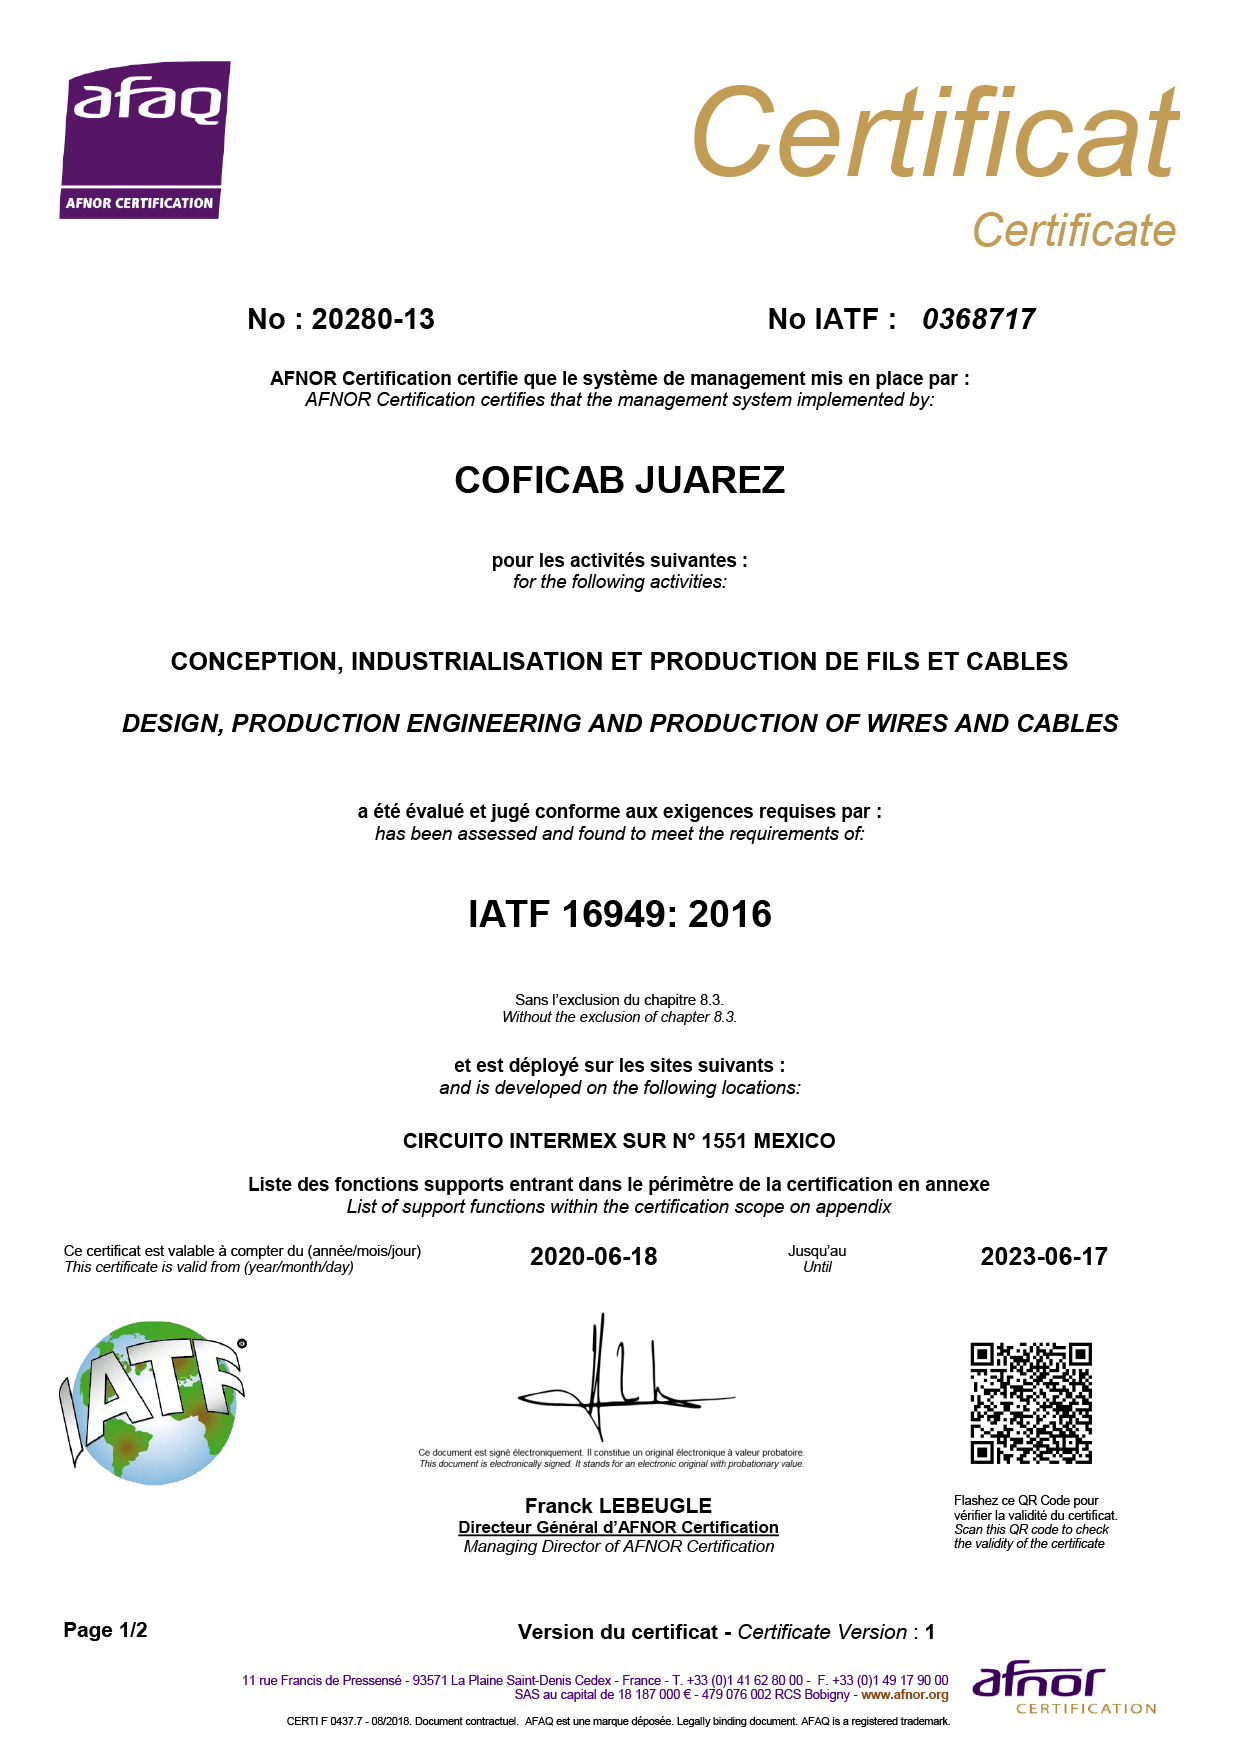 CERTI F 0437 Certificat IATF 16949